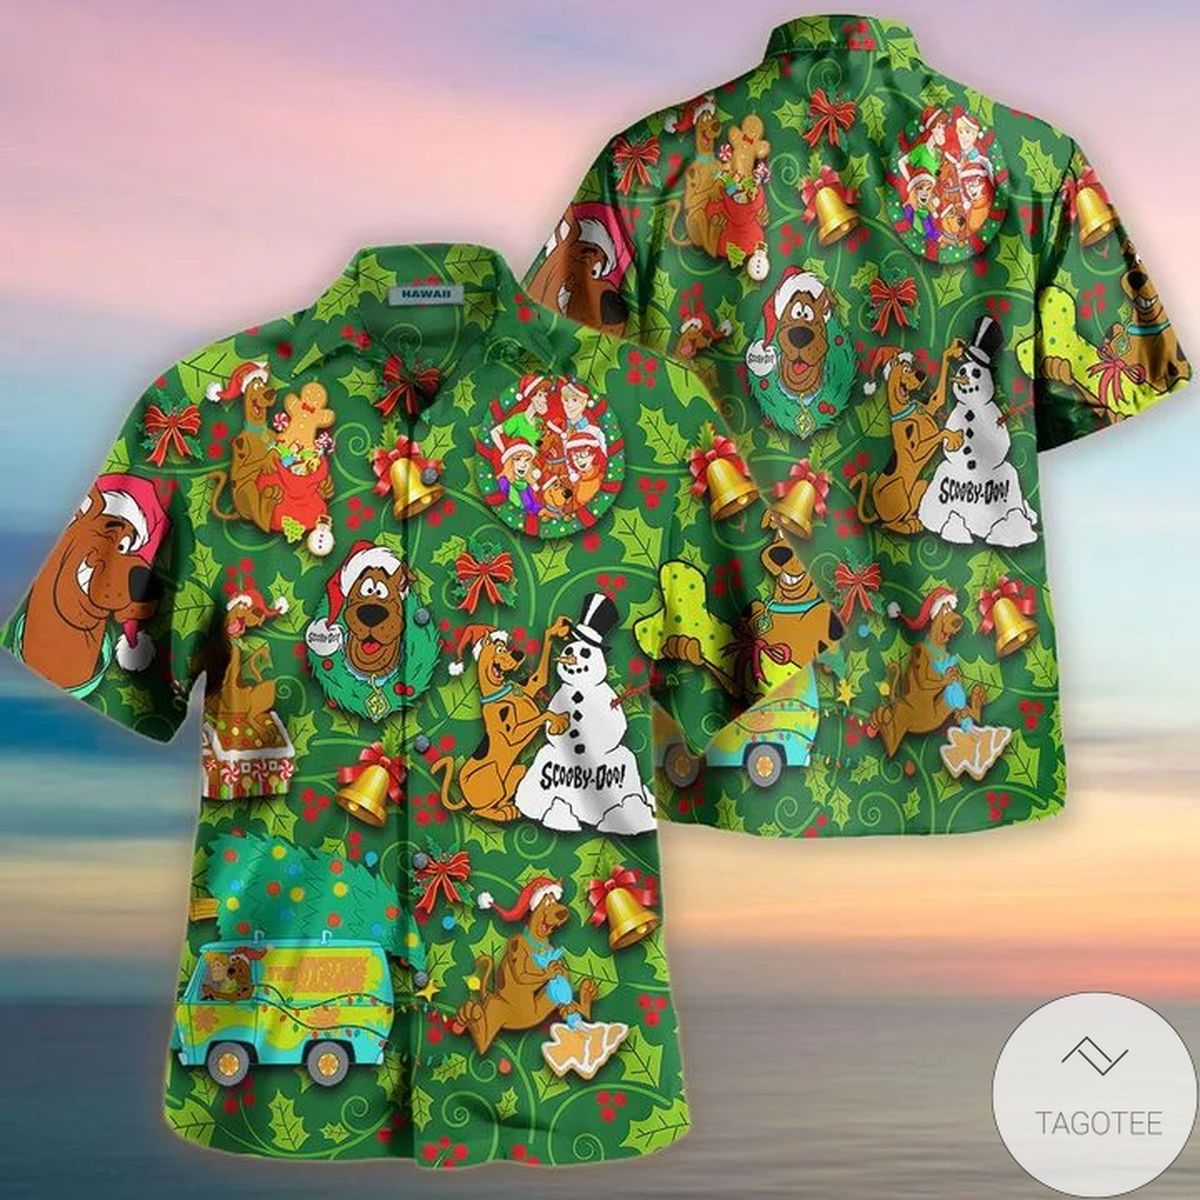 We'll All Be Home For Christmas Scooby Doo Hawaiian Shirt